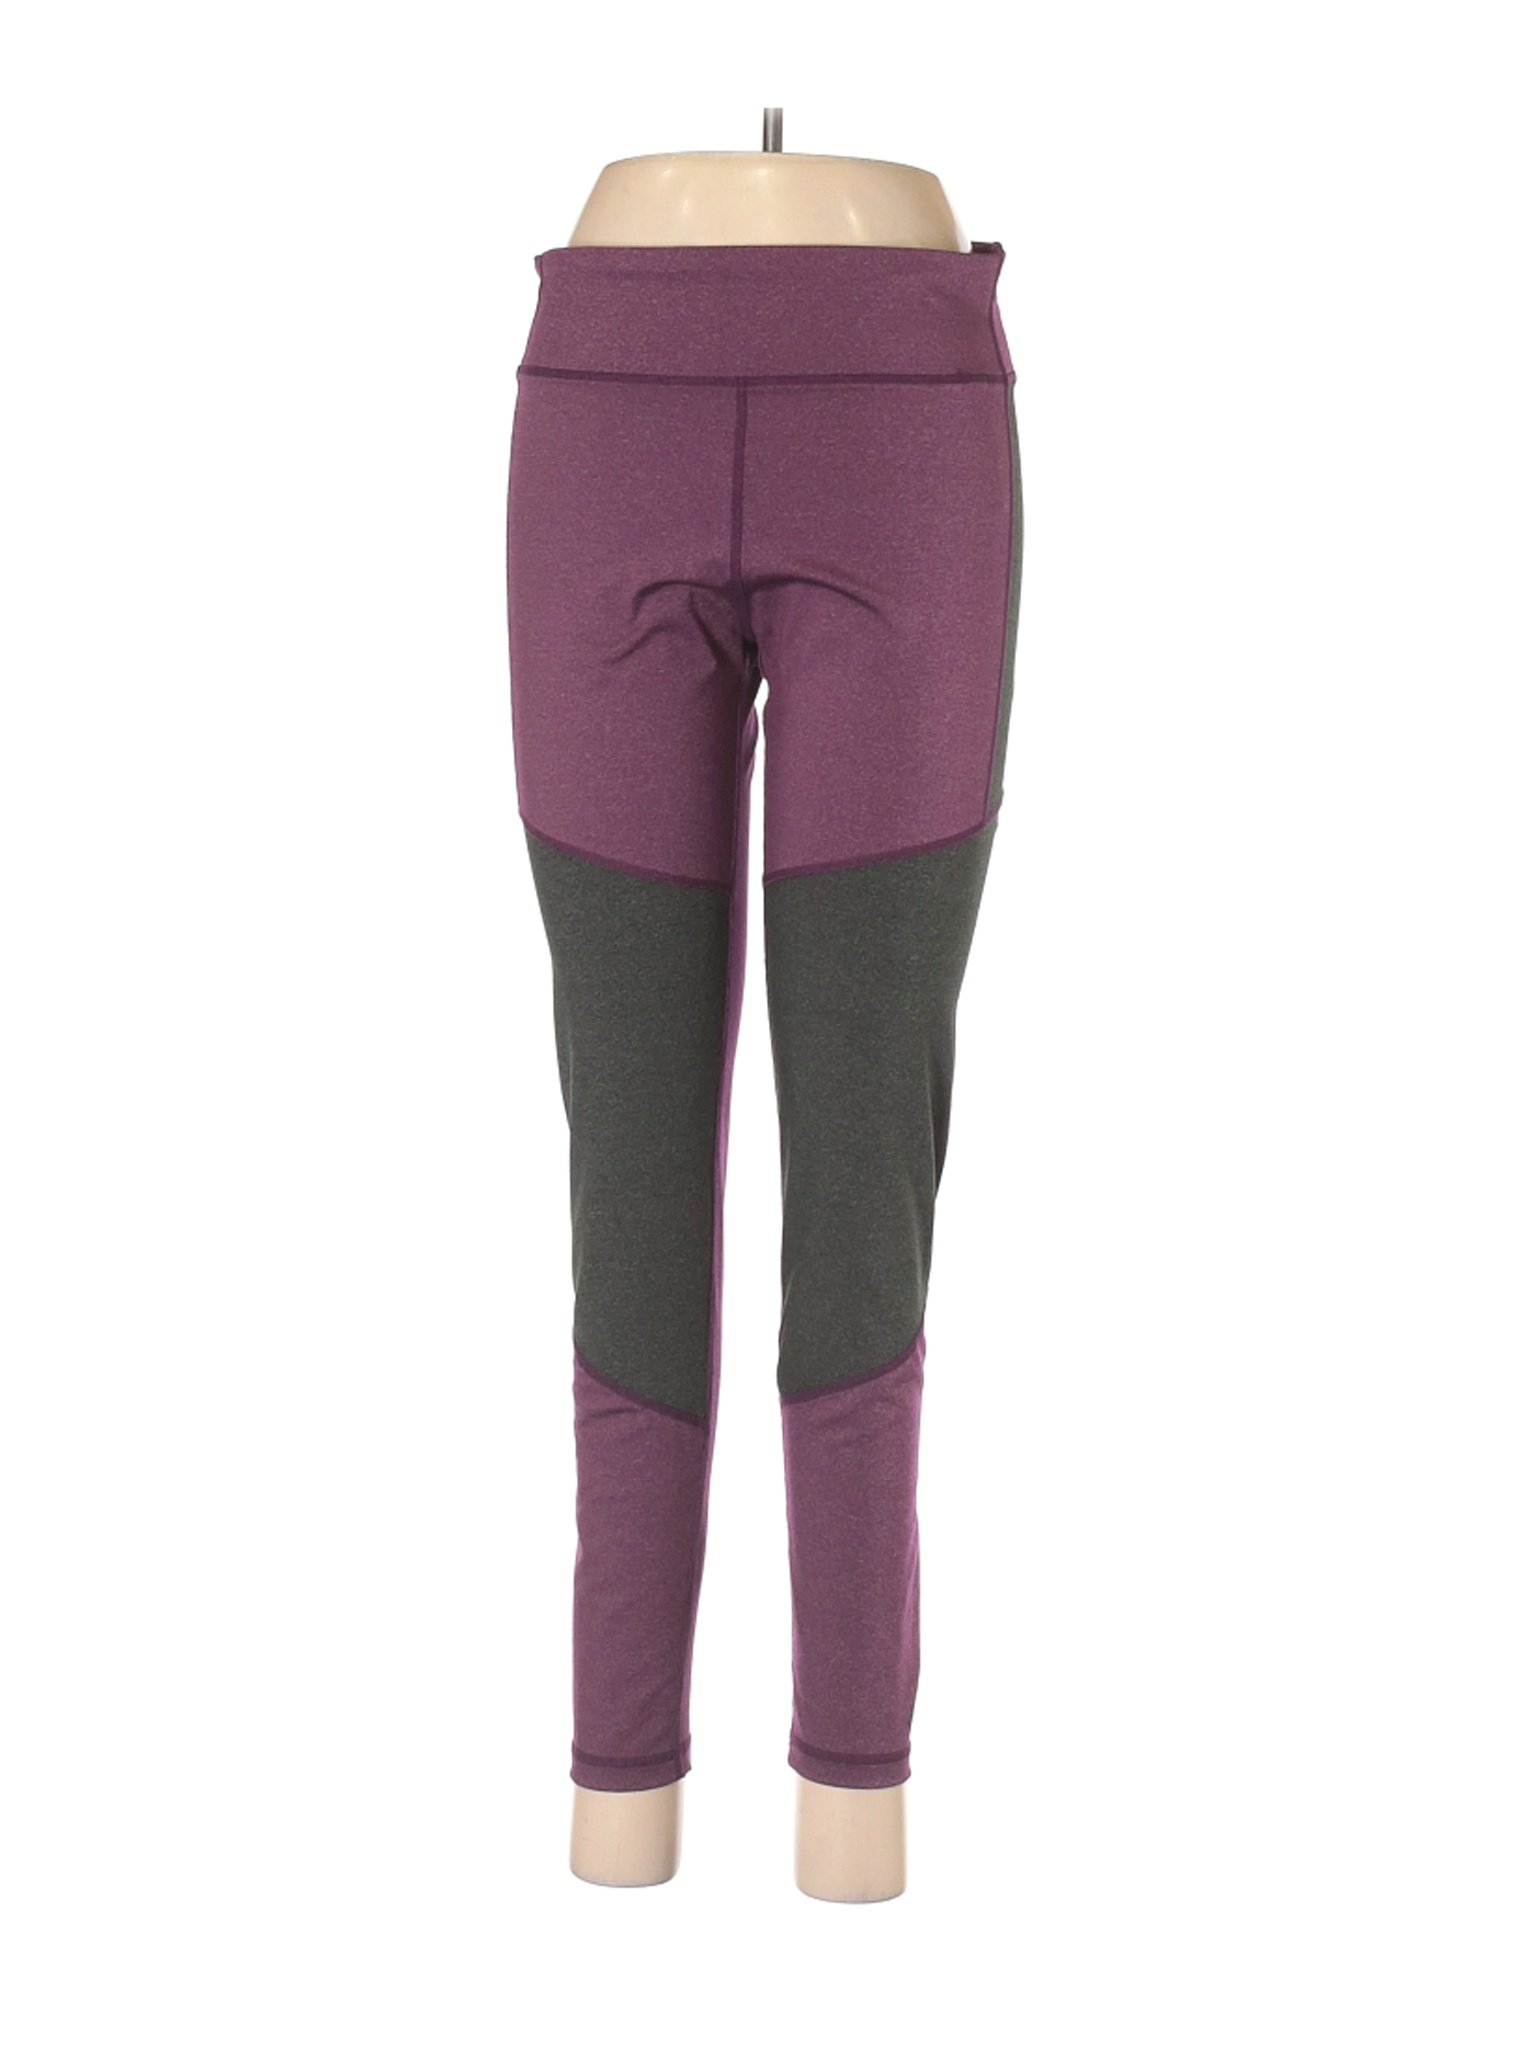 Adidas Women Purple Active Pants L | eBay